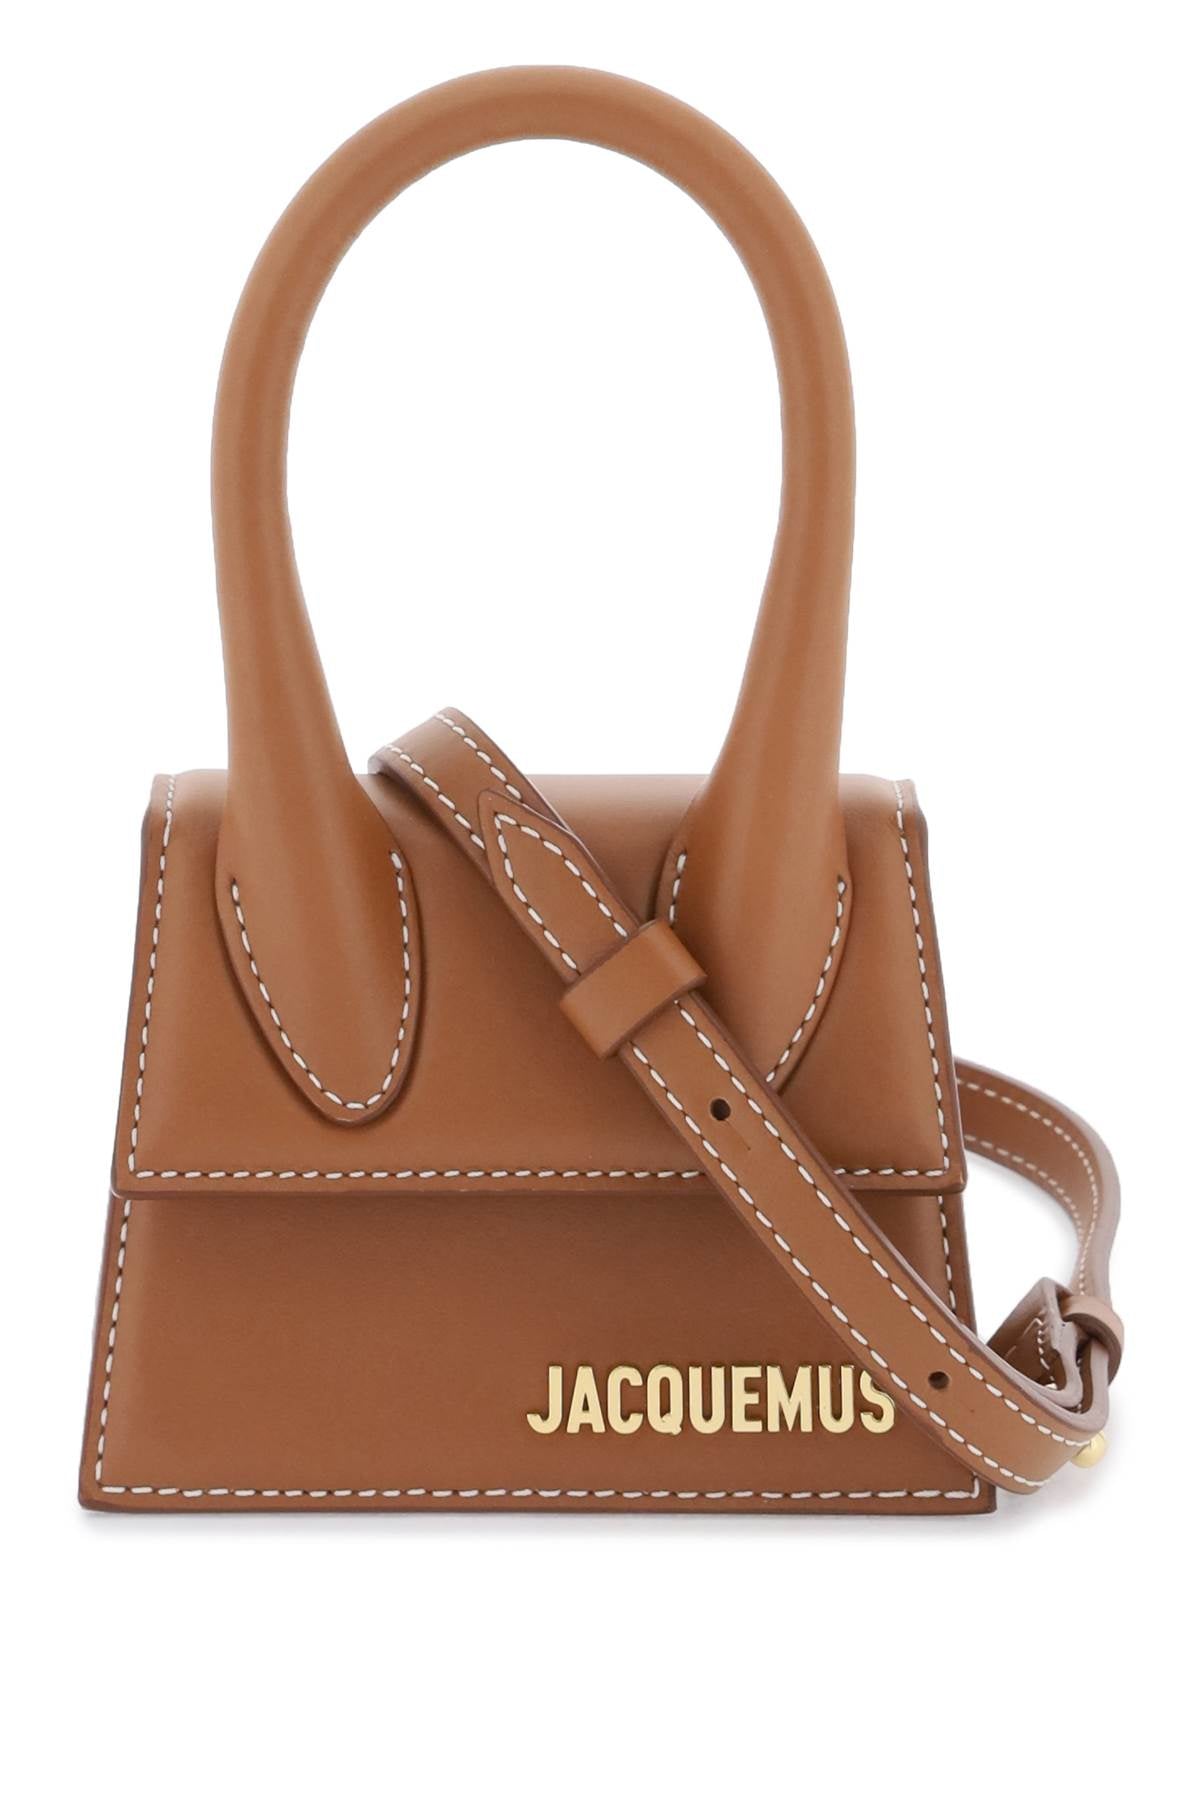 Jacquemus 'le chiquito' micro bag-0